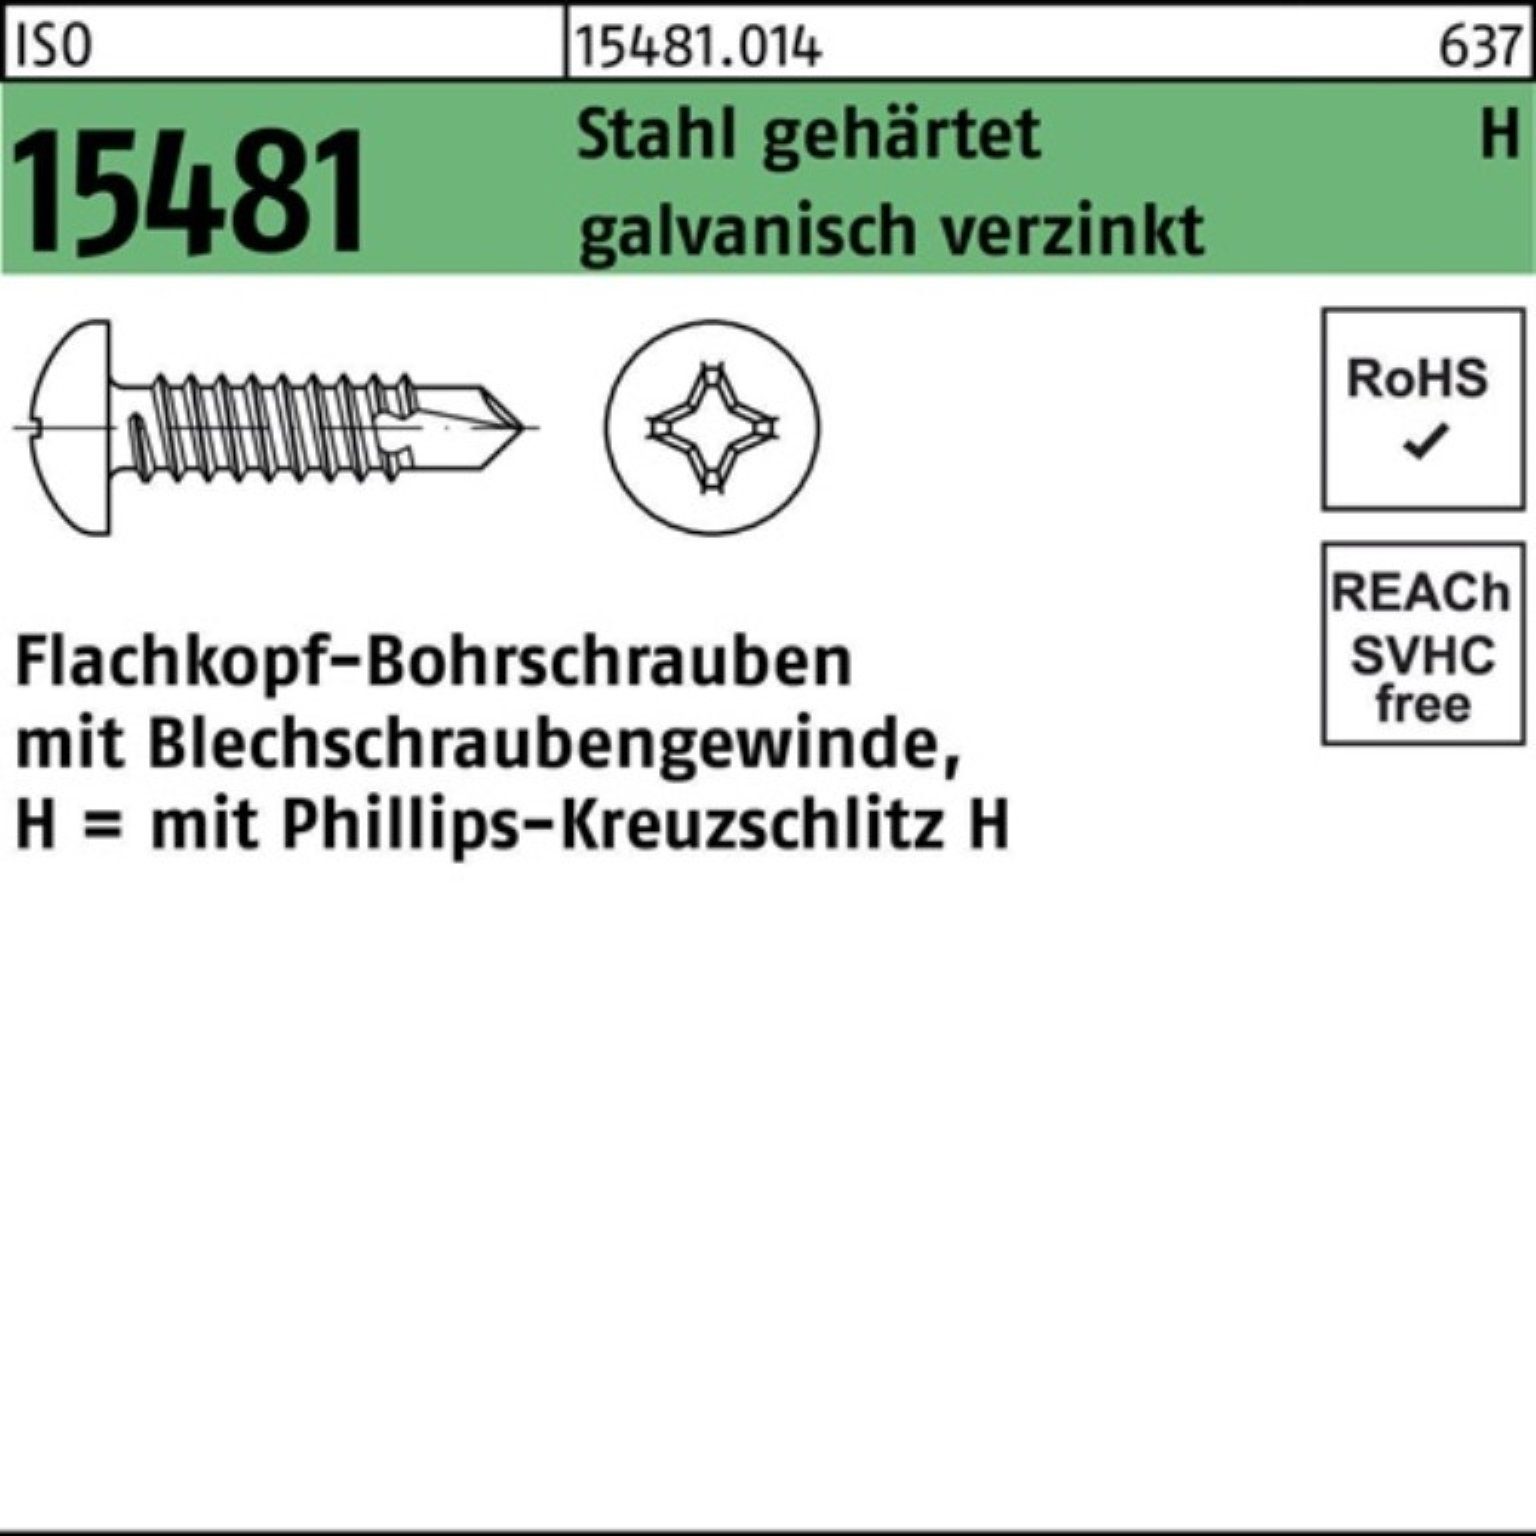 Bohrschraube Pack PH 500er FLAKObohrschraube 5,5x25-H Reyher ST 15481 ISO gehärtet Stahl